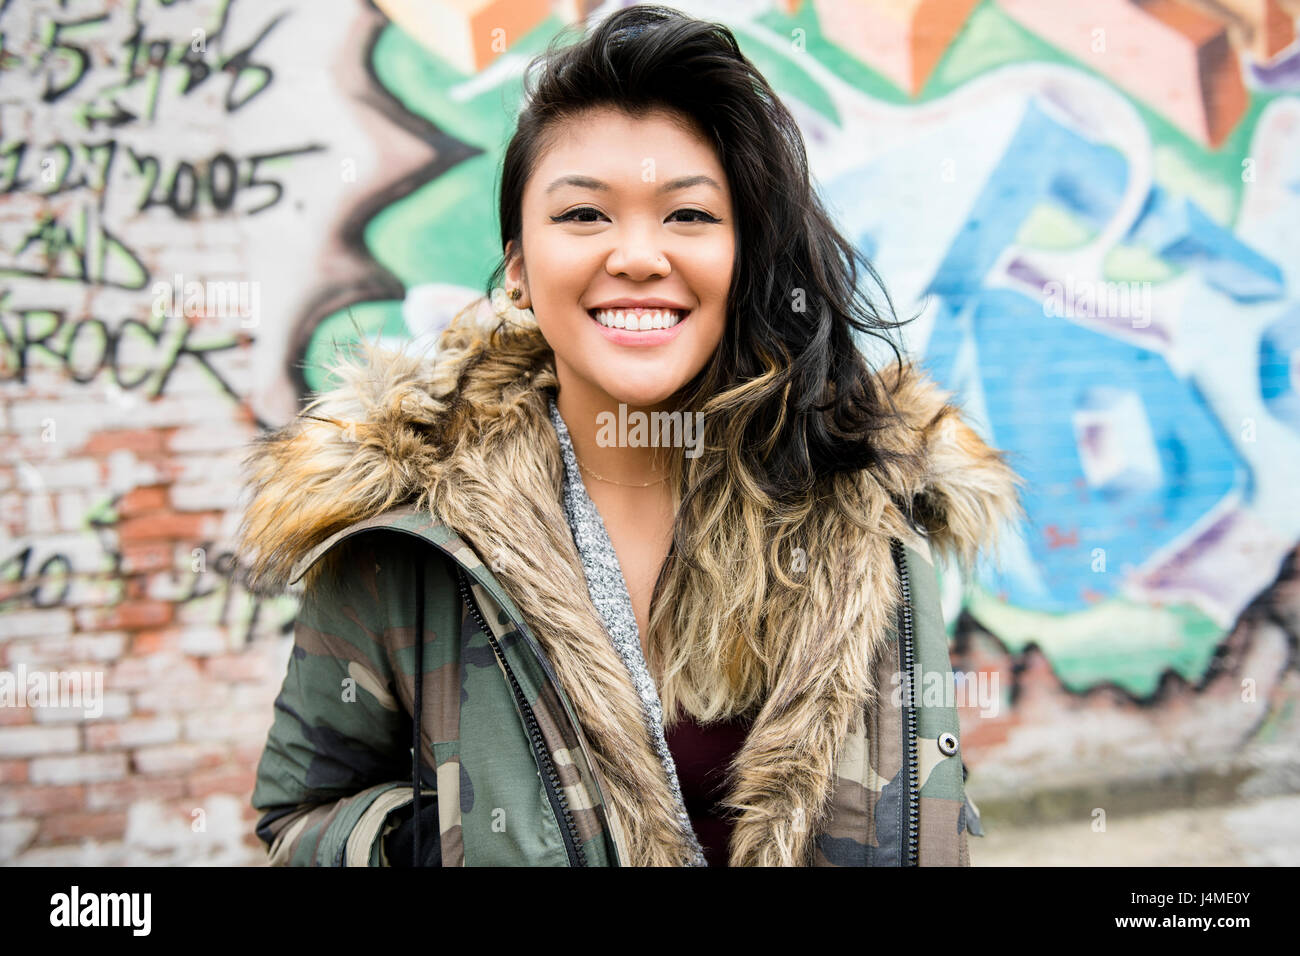 Portrait of smiling Mixed Race woman standing near graffiti Stock Photo